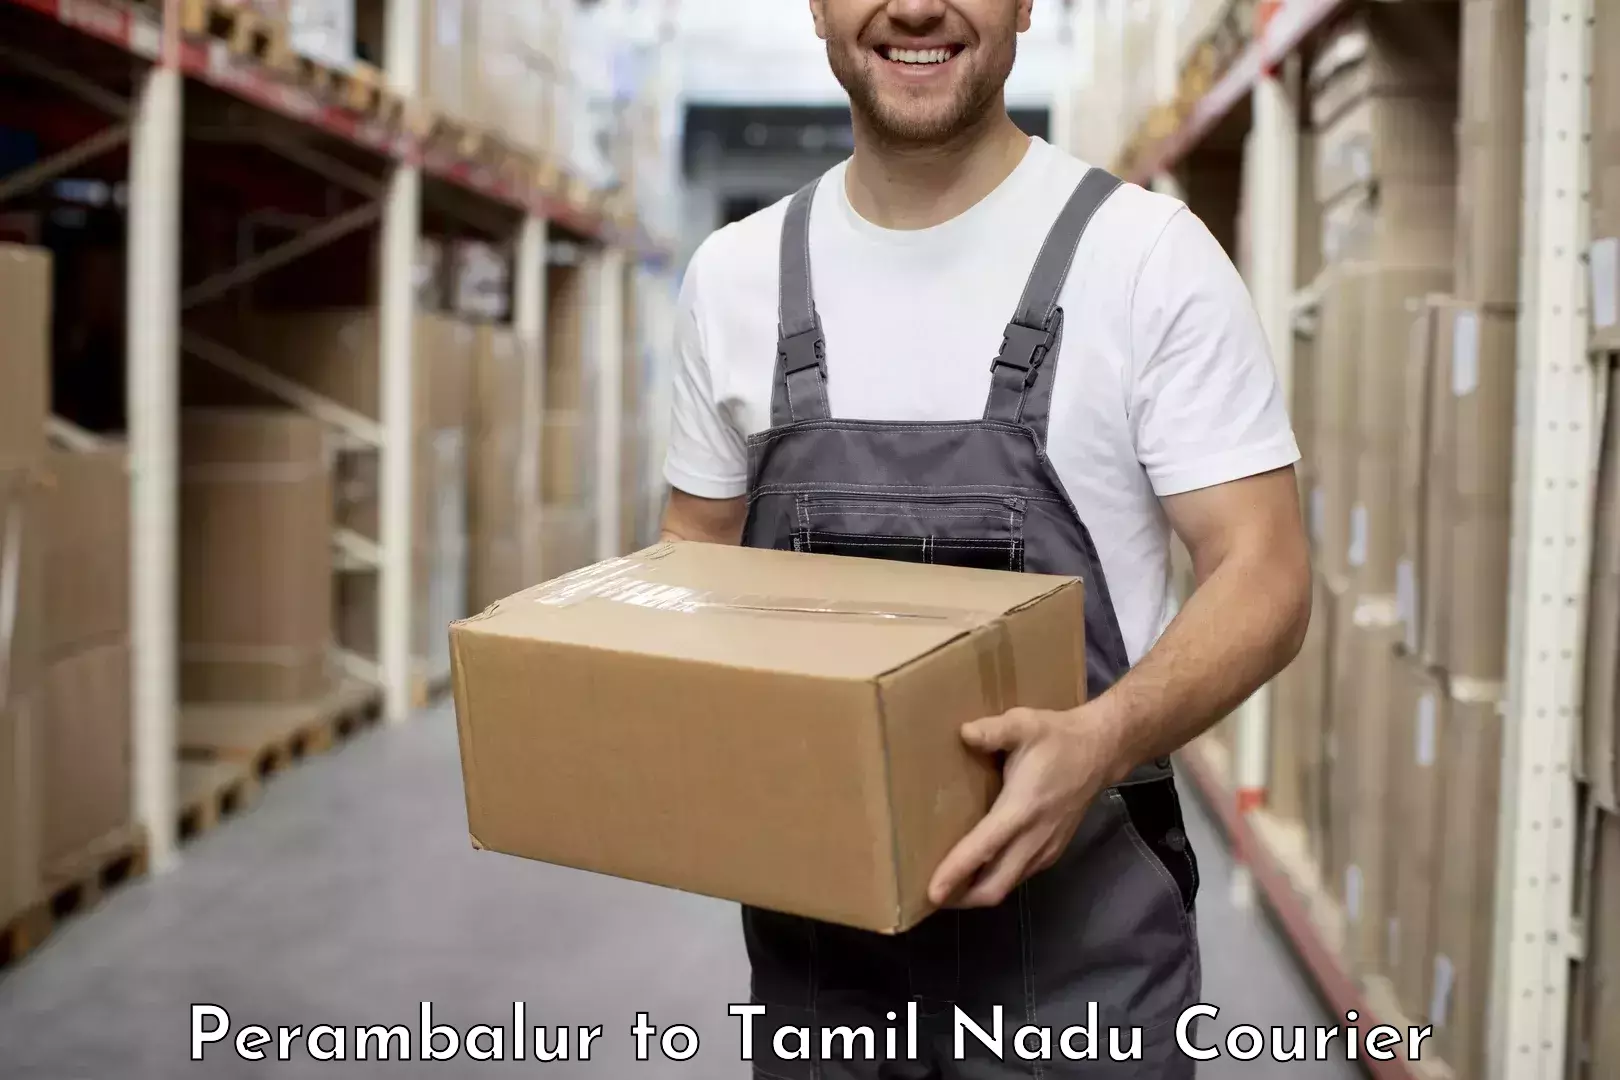 State-of-the-art courier technology Perambalur to Tiruvannamalai